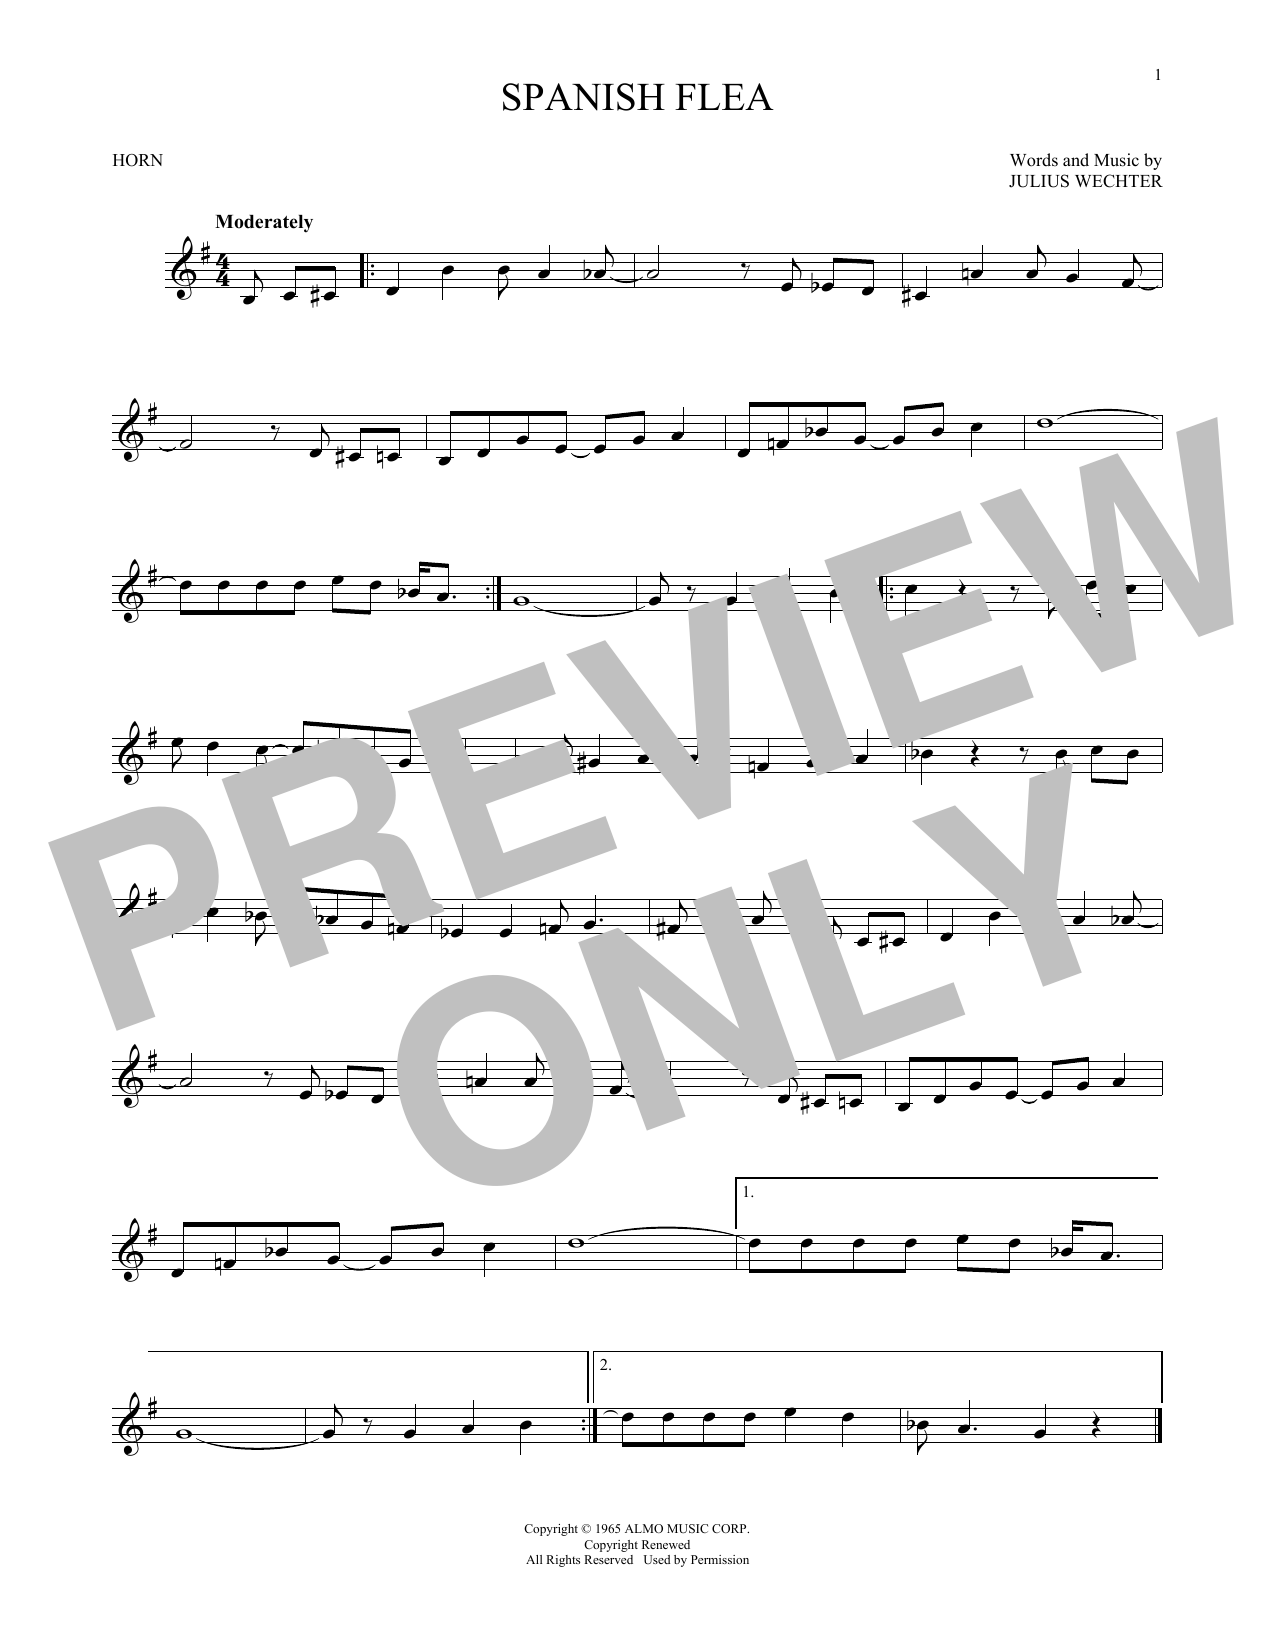 Herb Alpert & The Tijuana Brass Band Spanish Flea Sheet Music Notes & Chords for Melody Line, Lyrics & Chords - Download or Print PDF